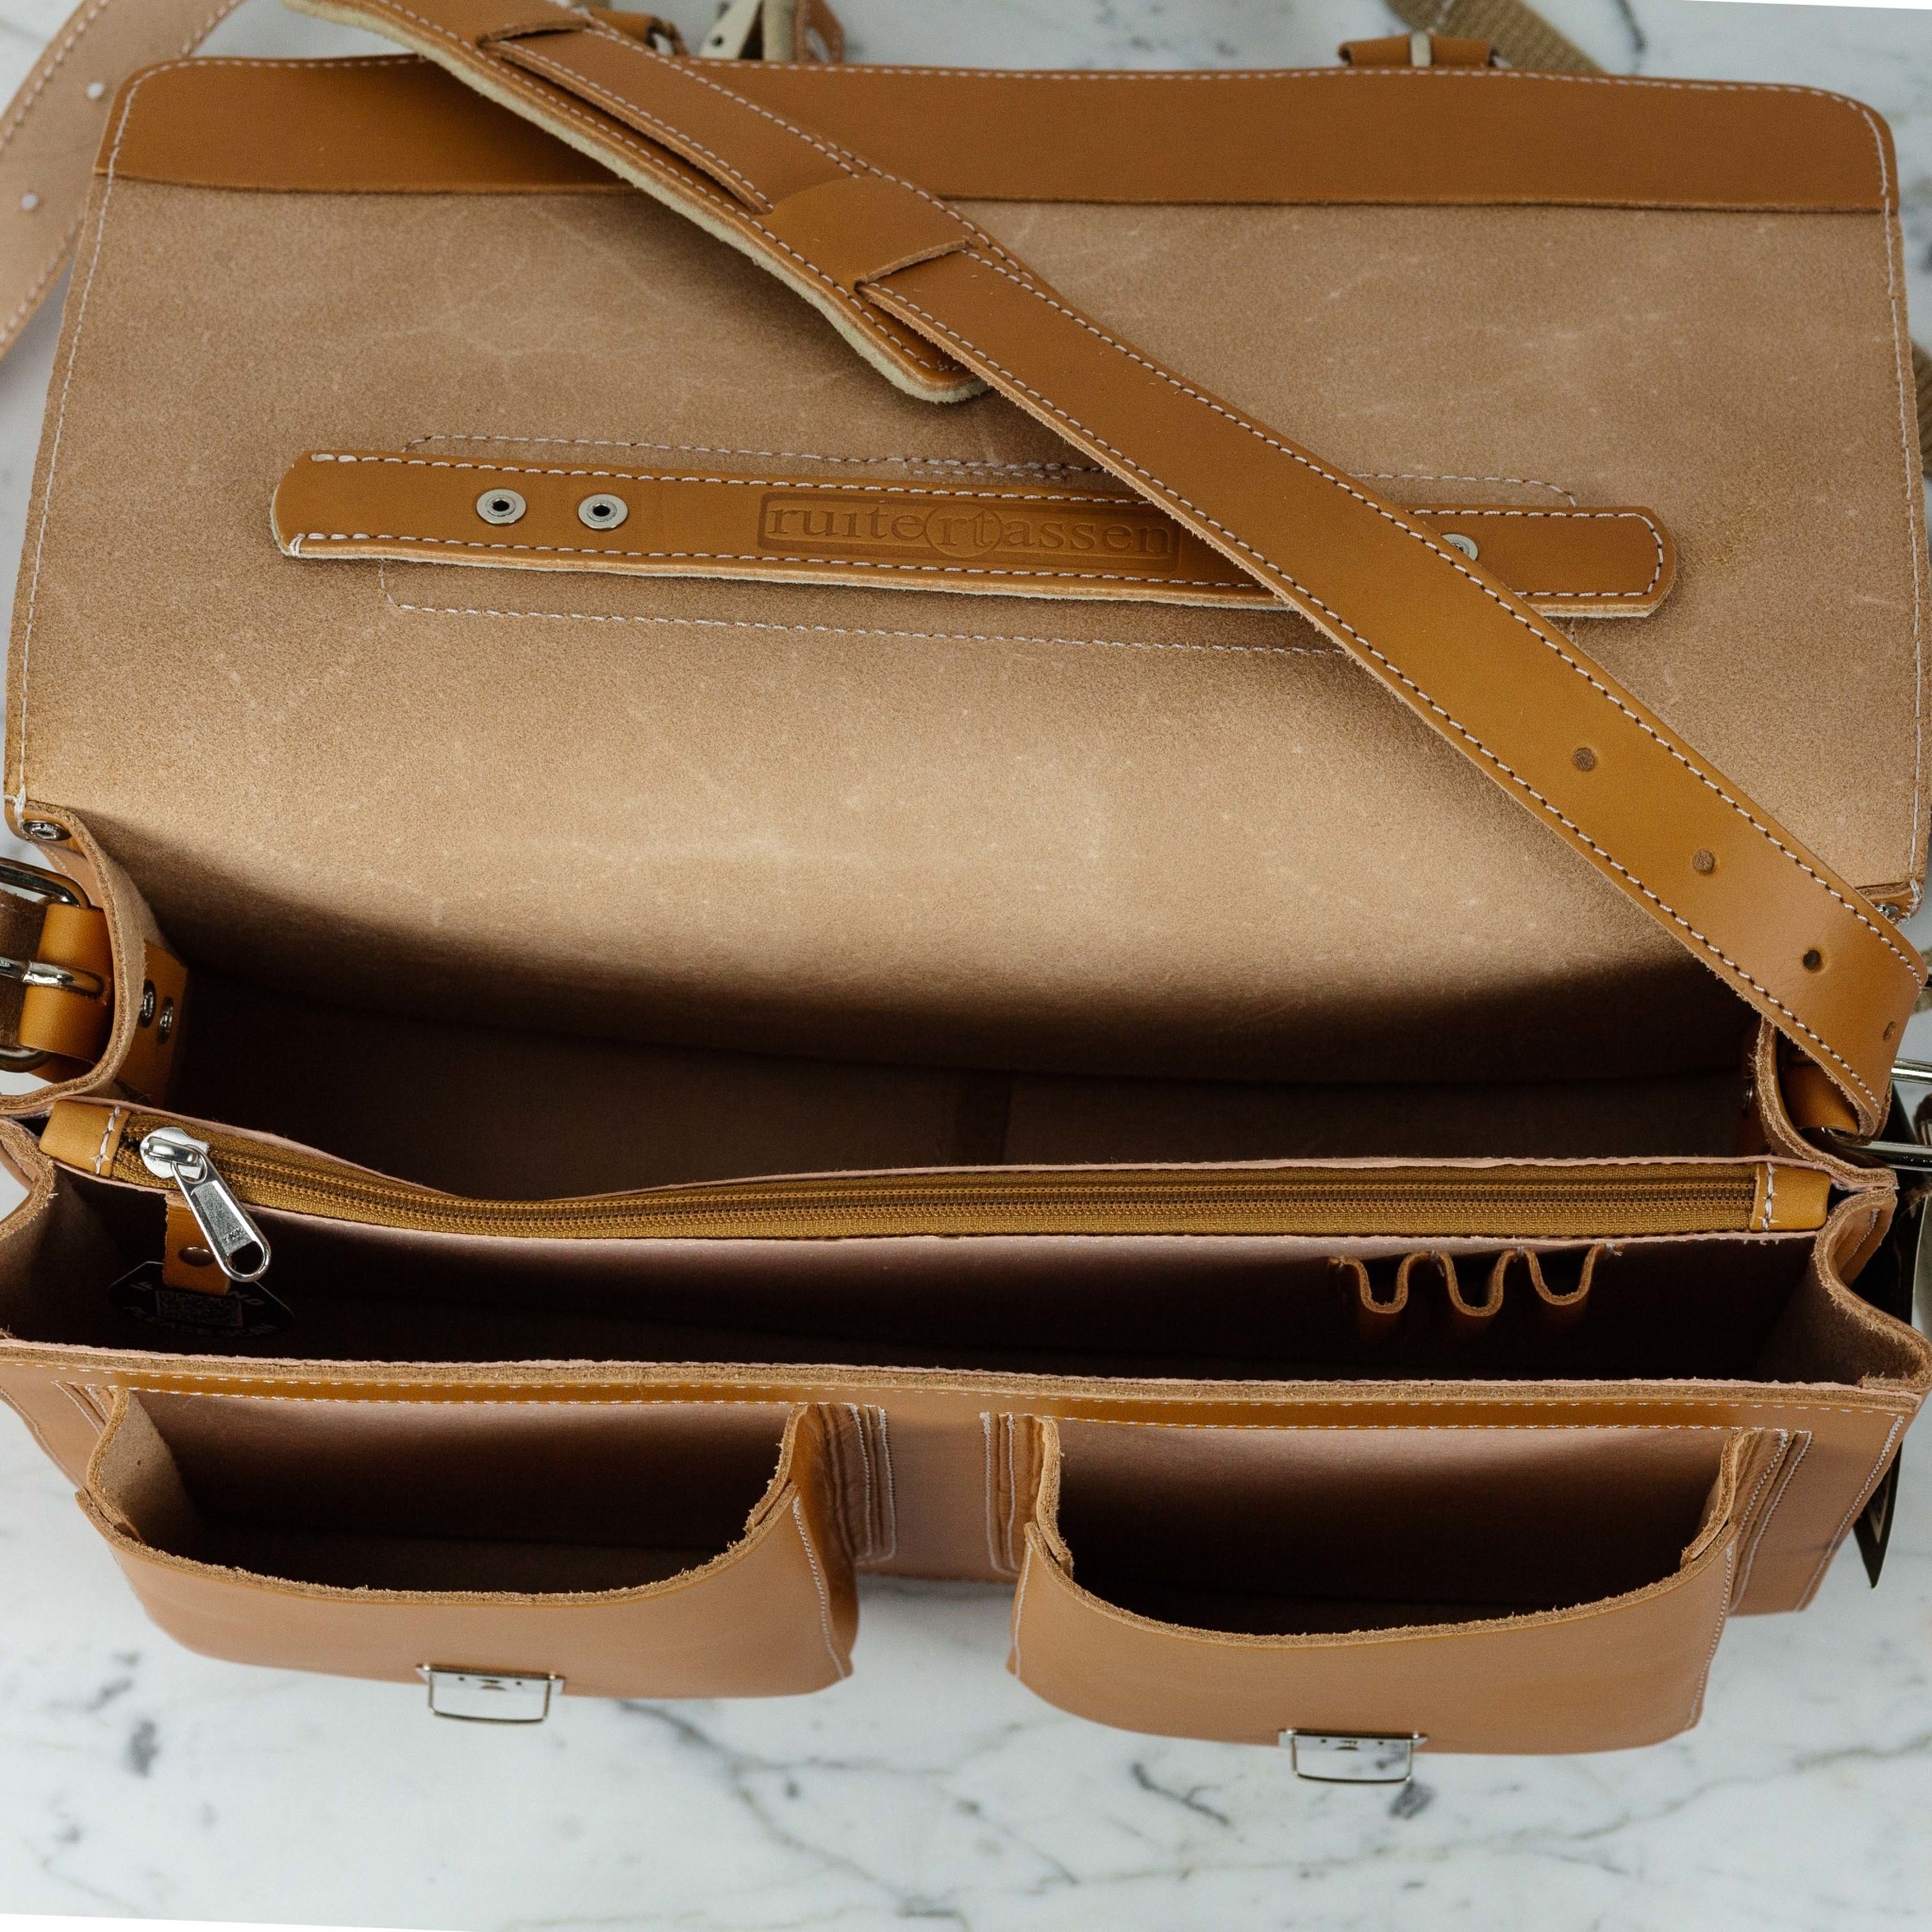 Ruitertassen Natural Leather Satchel - Convertible Shoulder or Backpack Straps - 2 Compartments